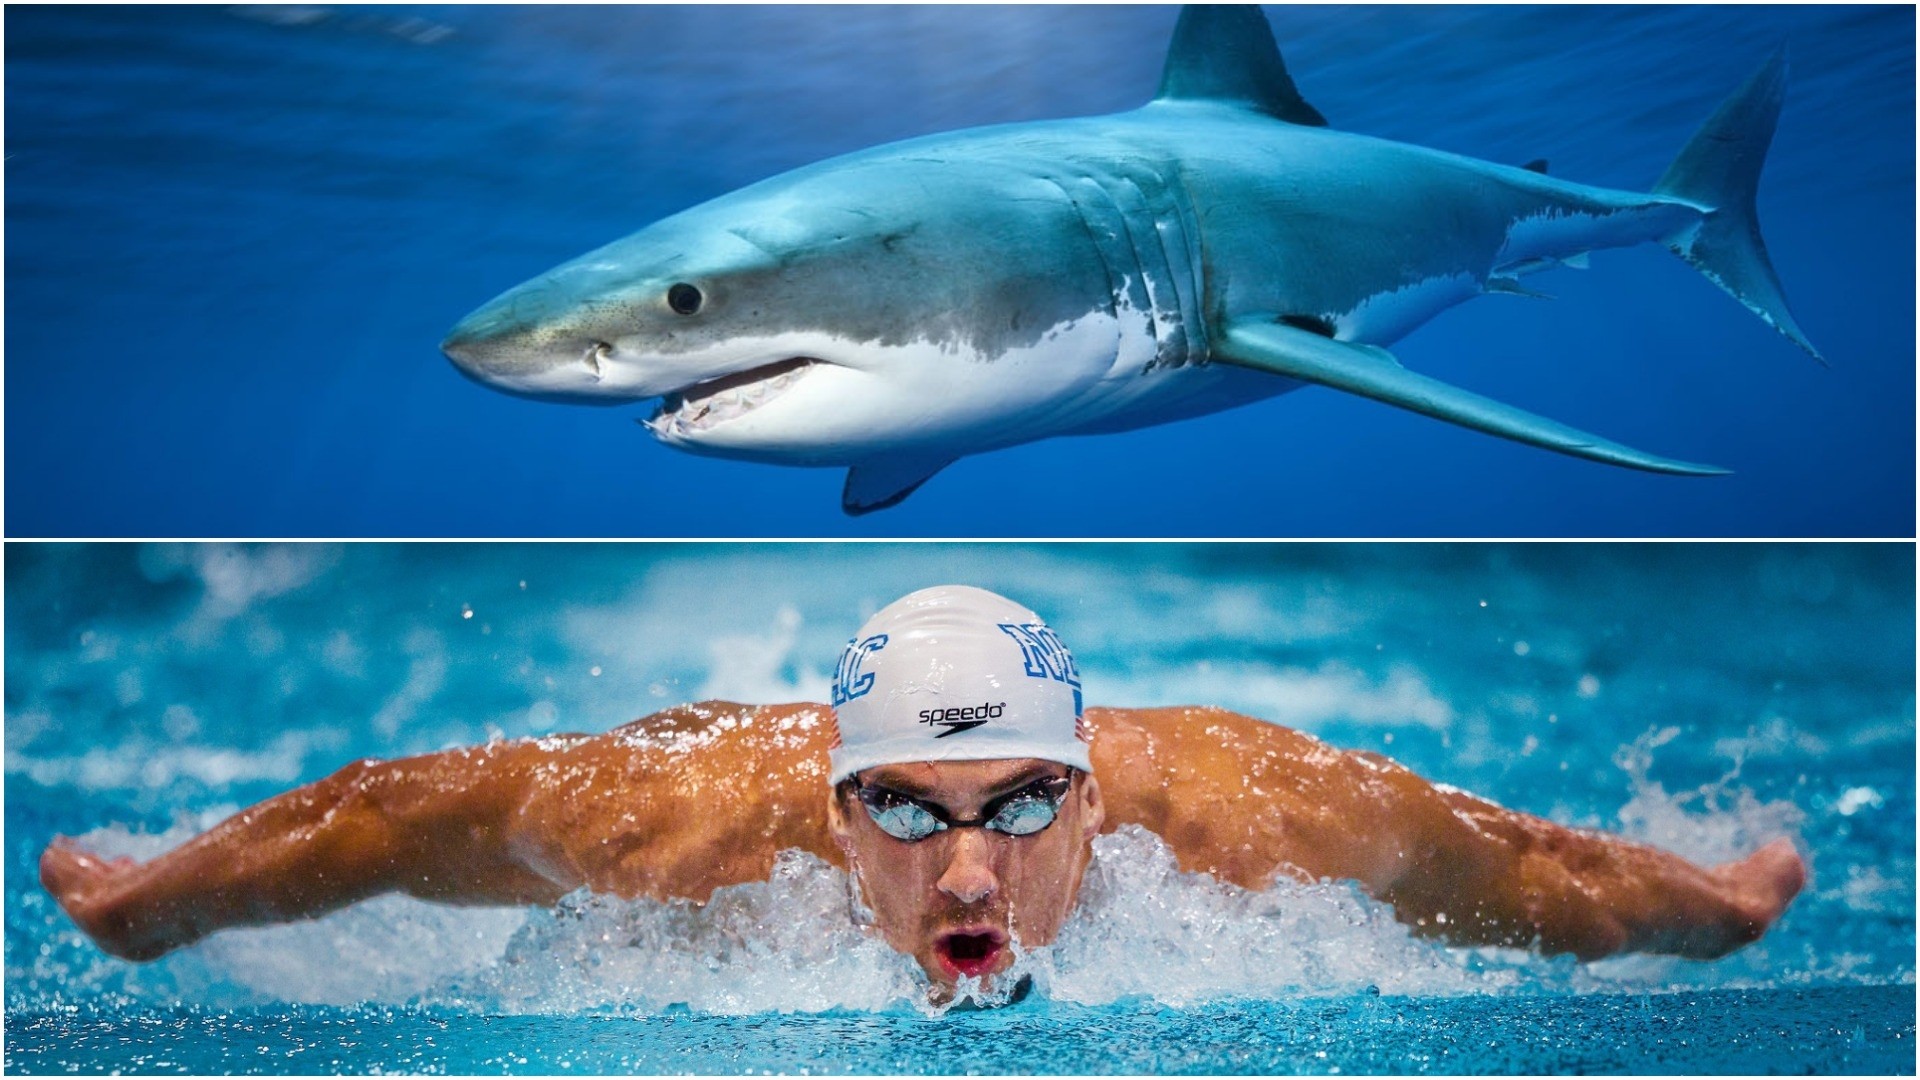 Michael Phelps vs. Great White Shark: Who will win?